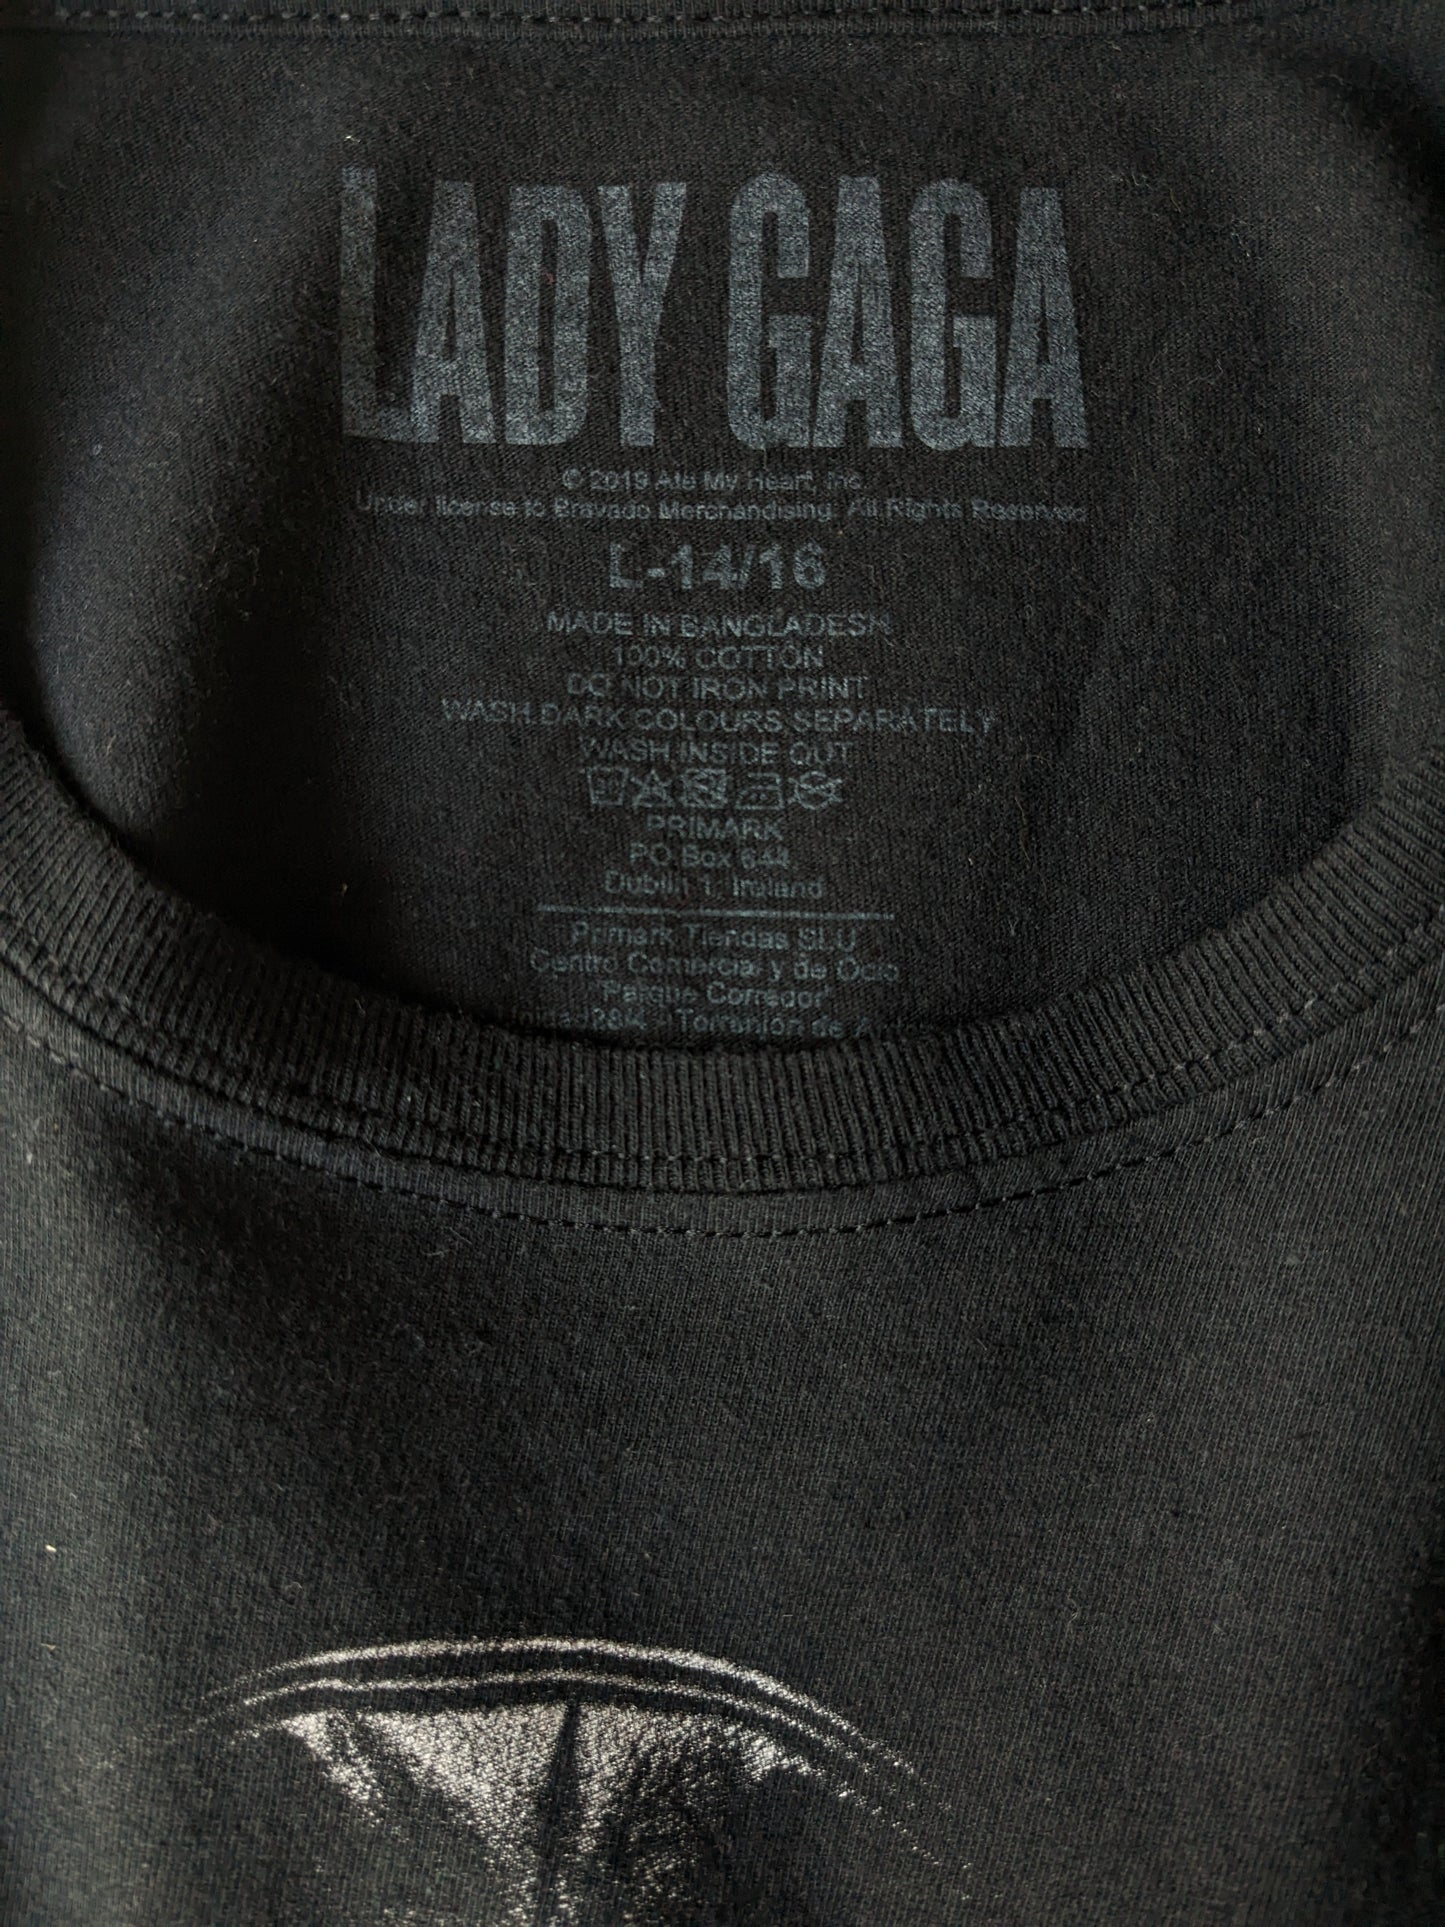 Lady Gaga shirt. Black with print. Size L Kids / S Adults.